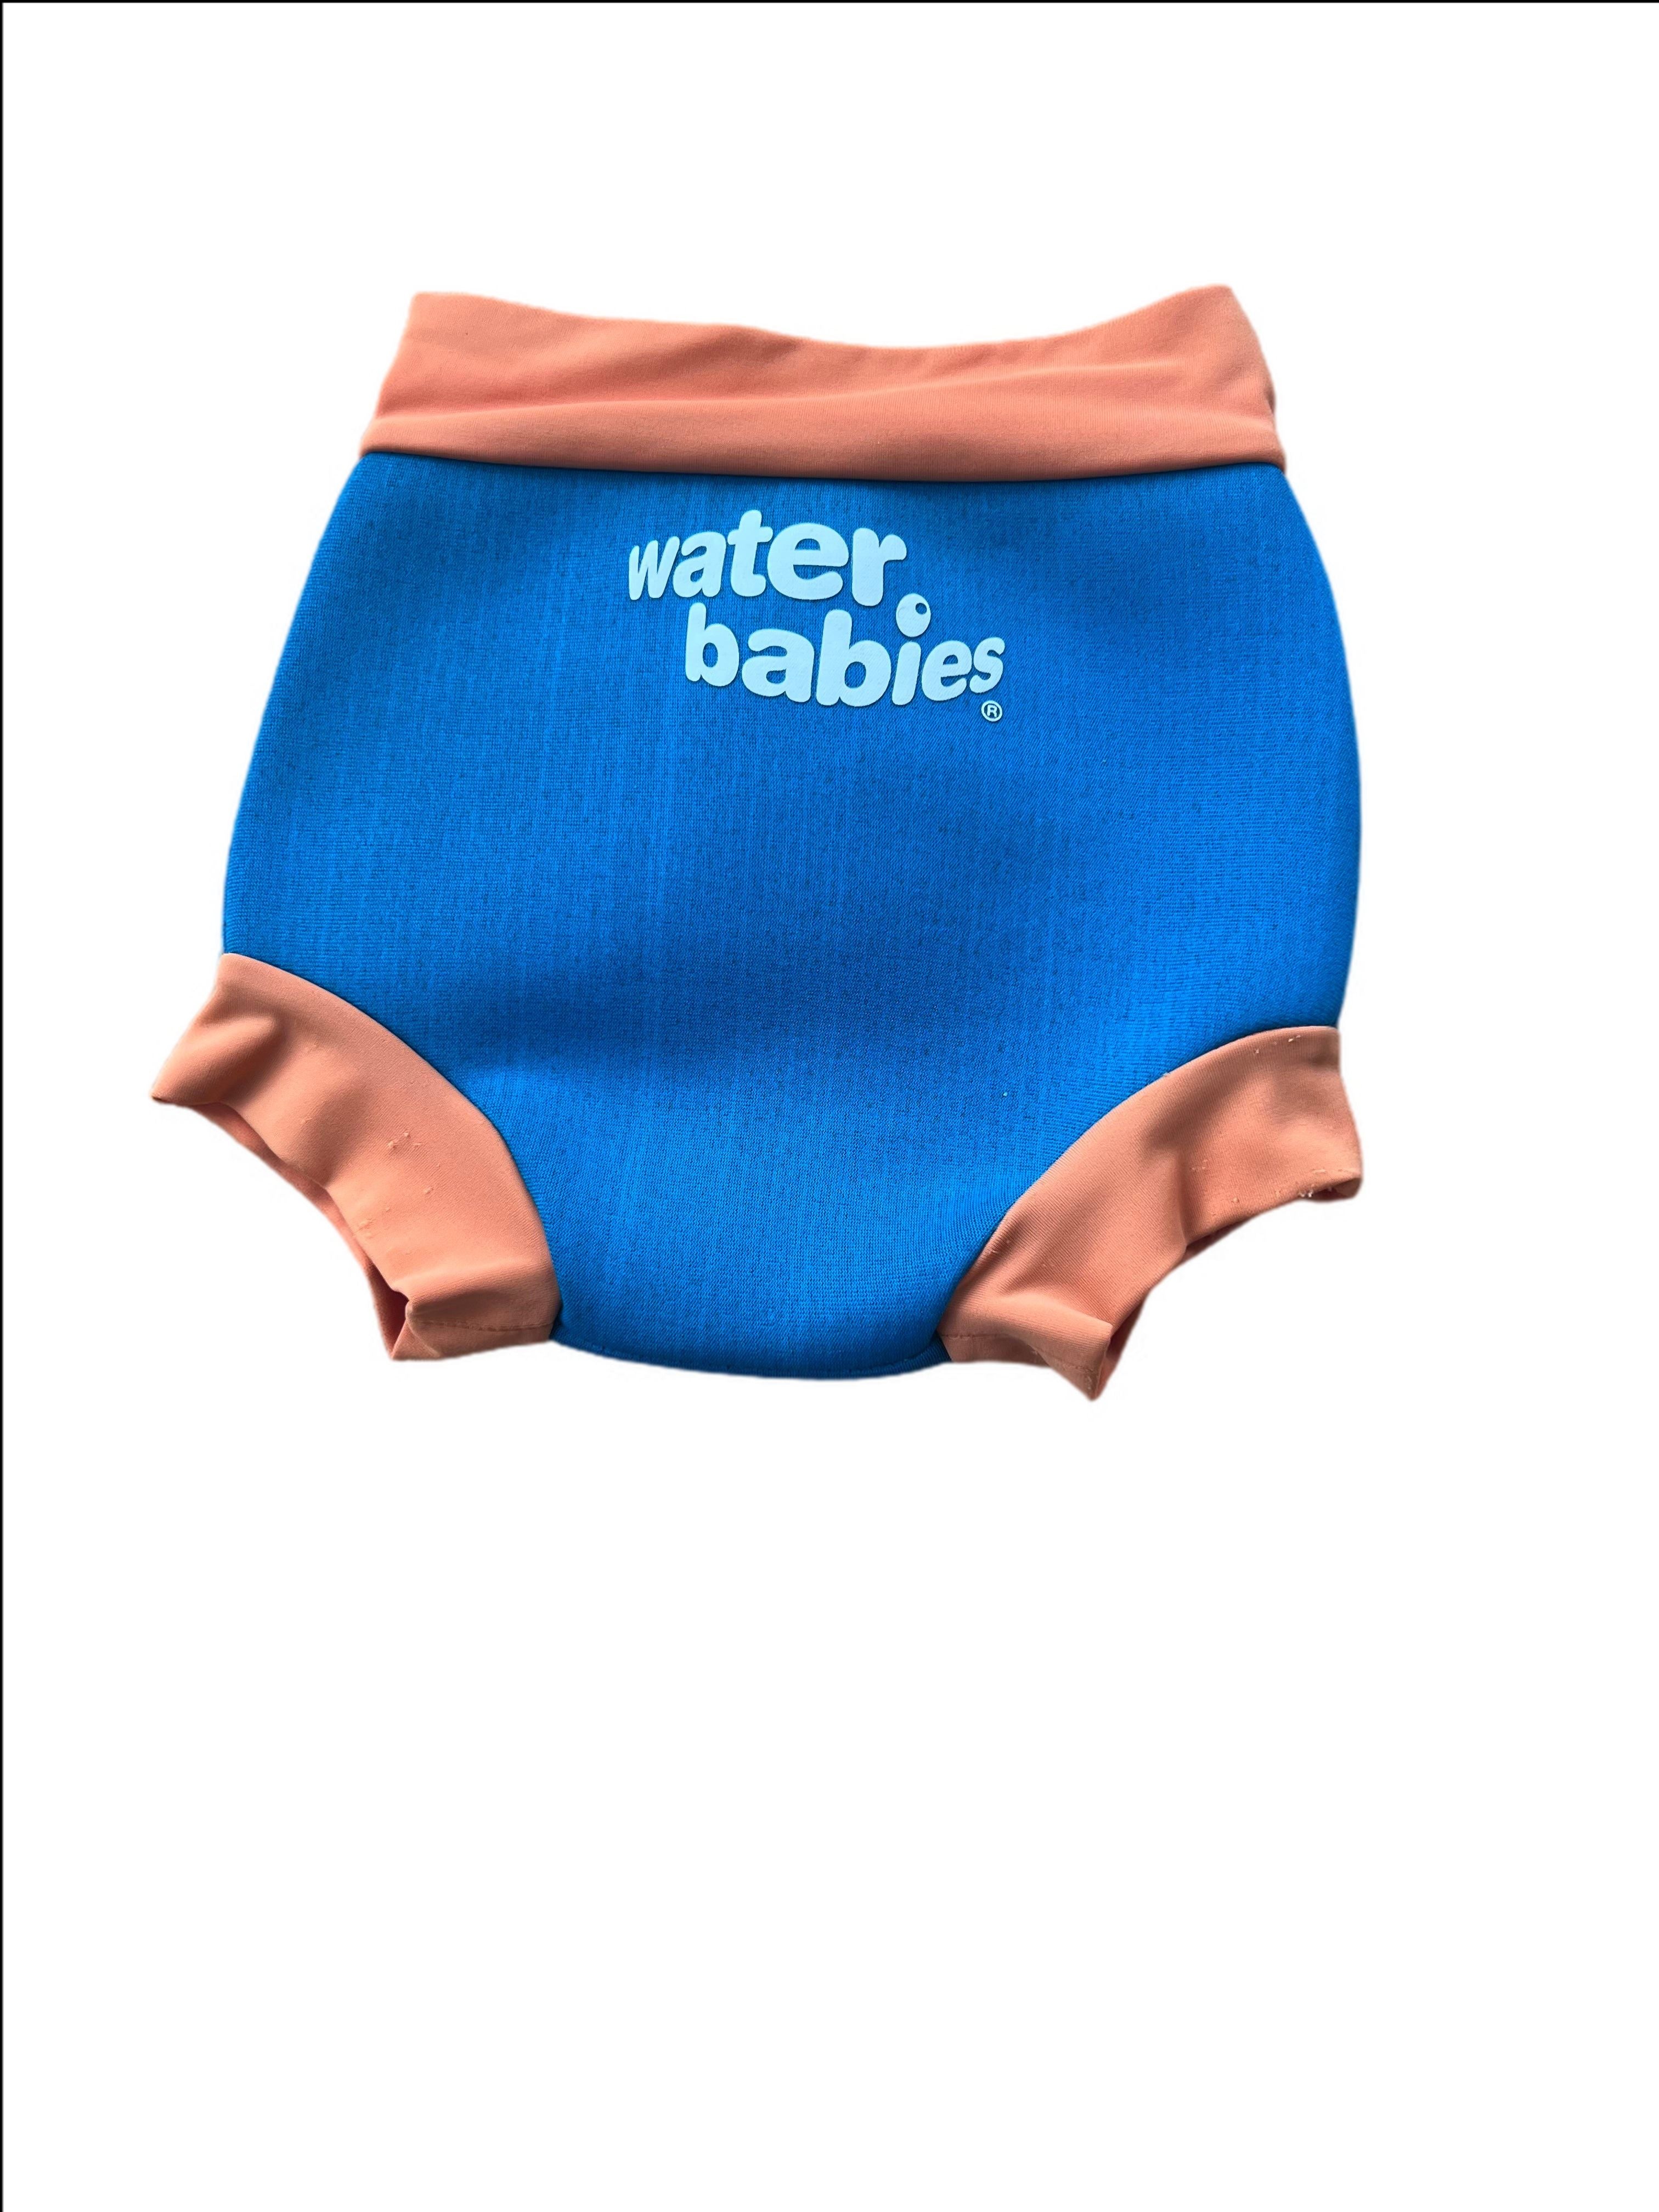 Water babies swim nappies